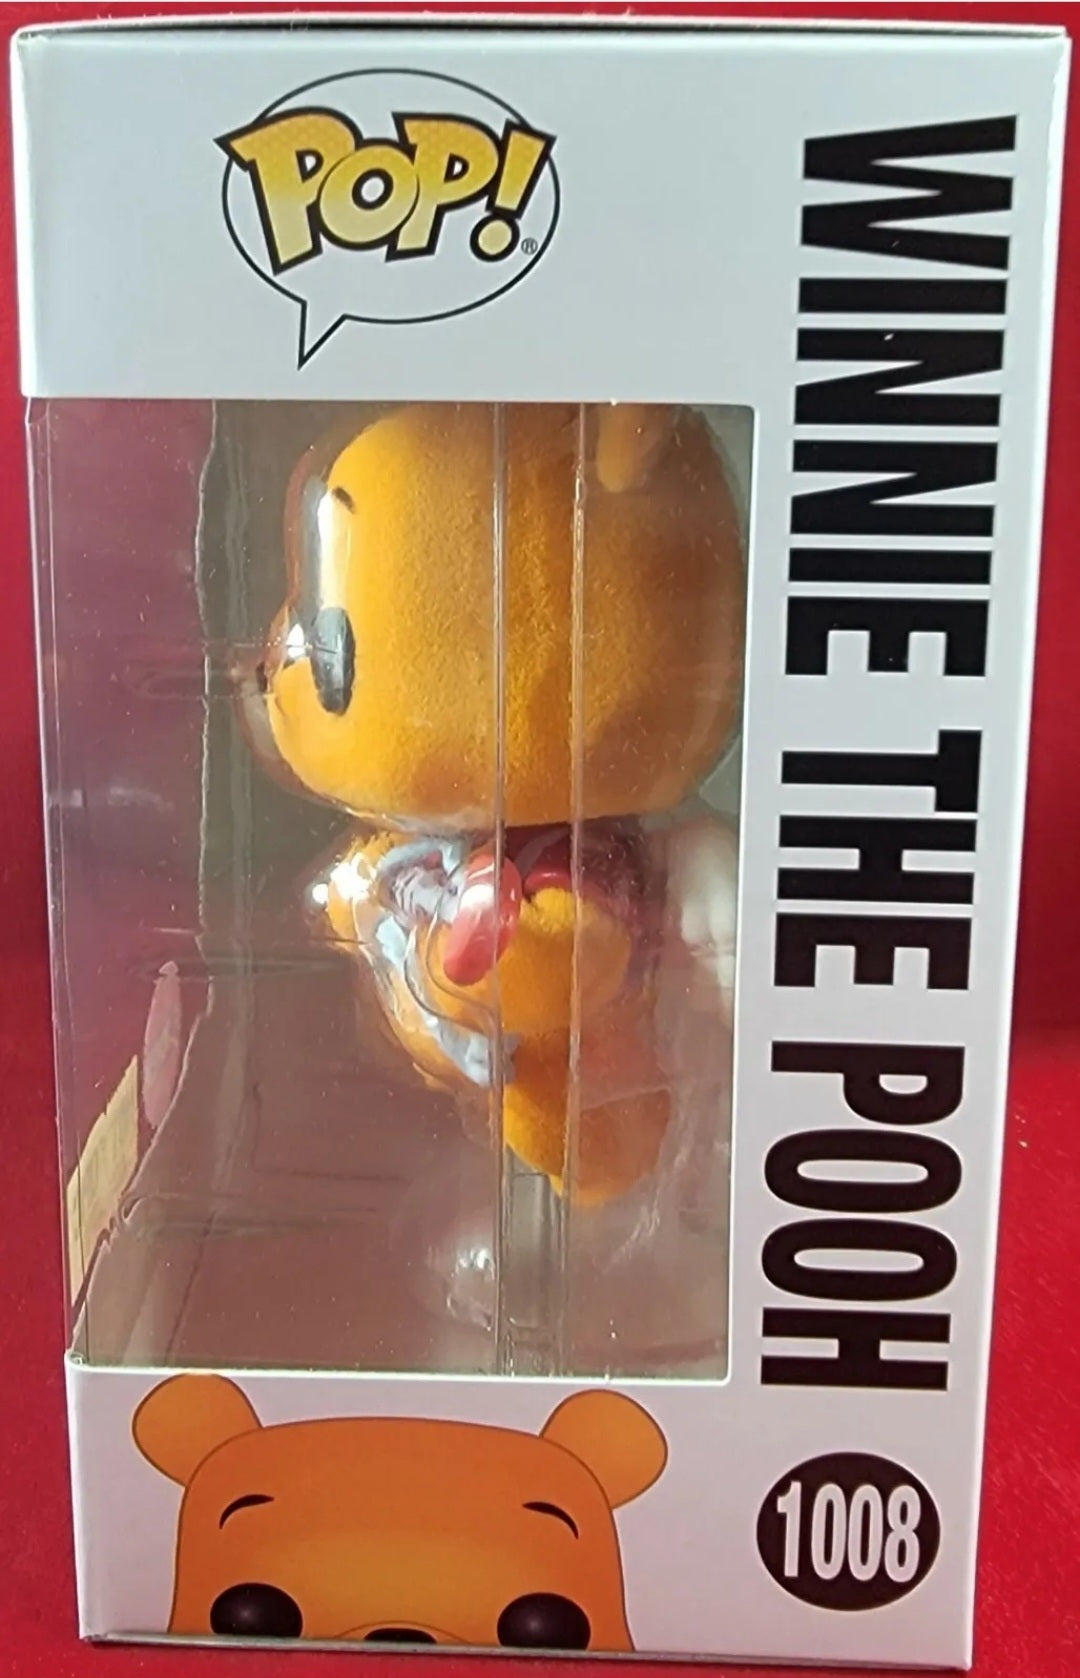 Winnie the pooh hot topic exclusive 1008 (nib) Brand new Winnie the pooh